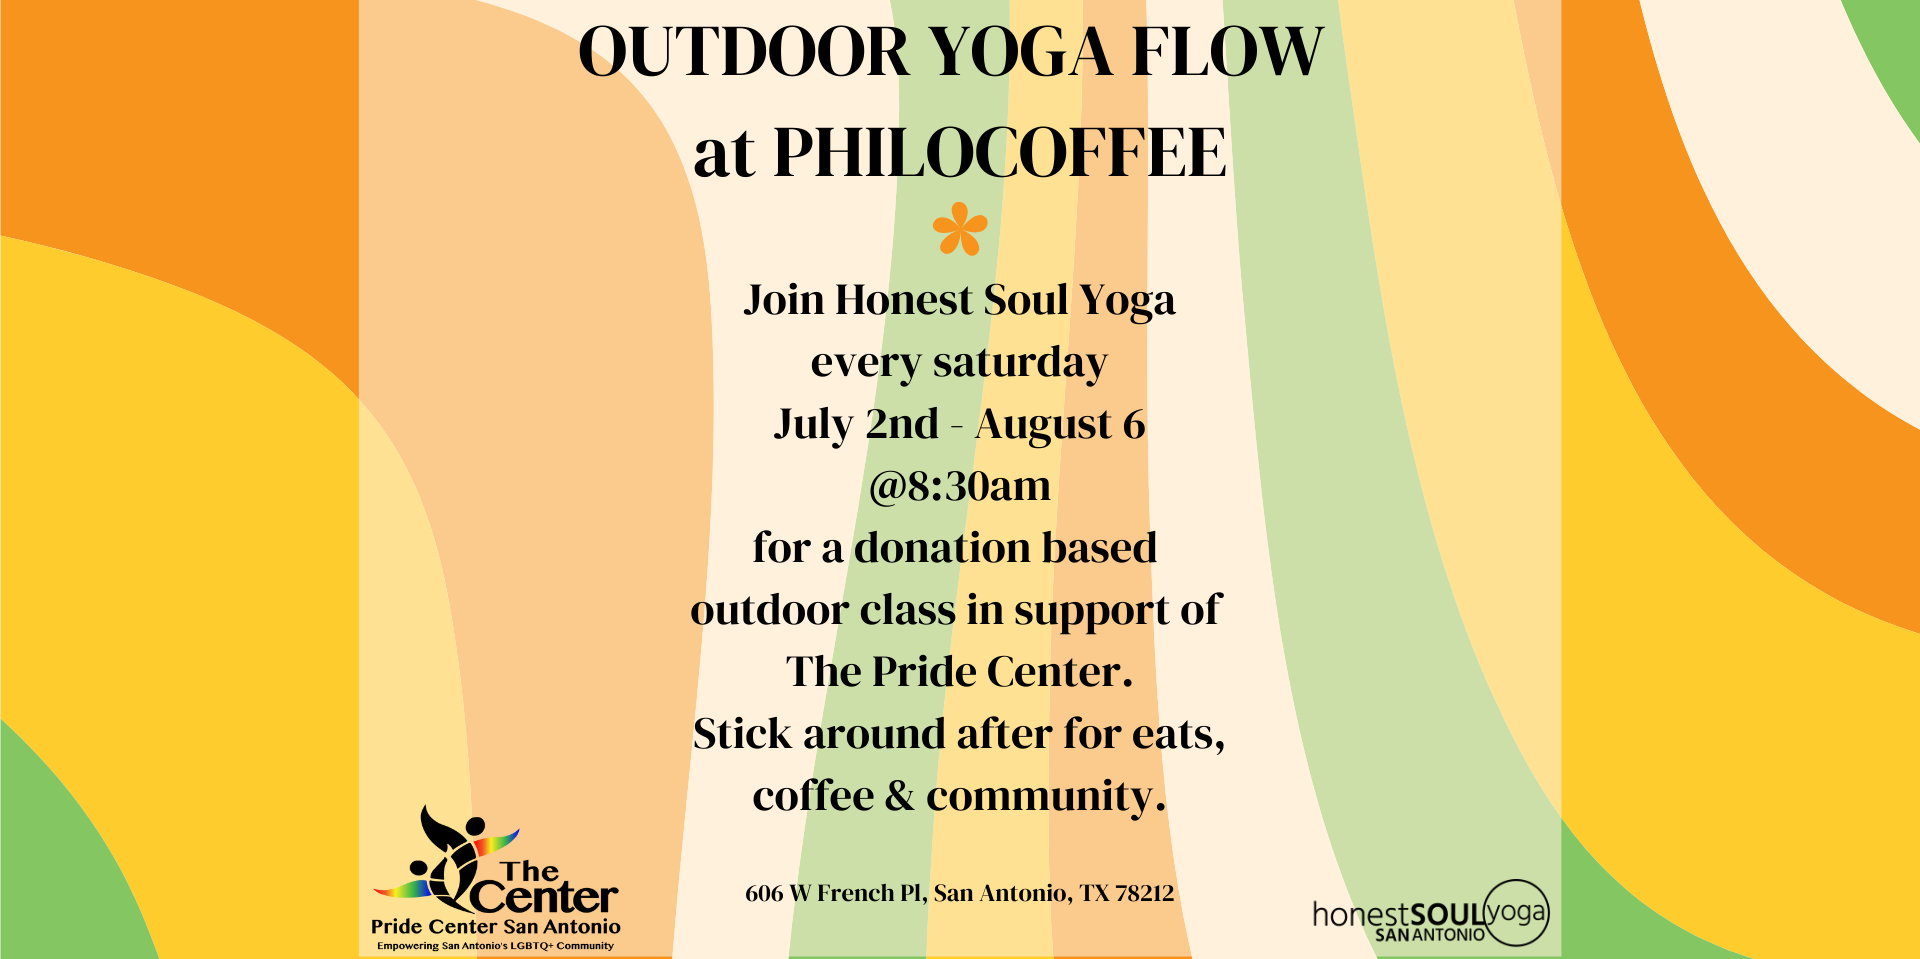 Outdoor Yoga Flow at Philocoffee